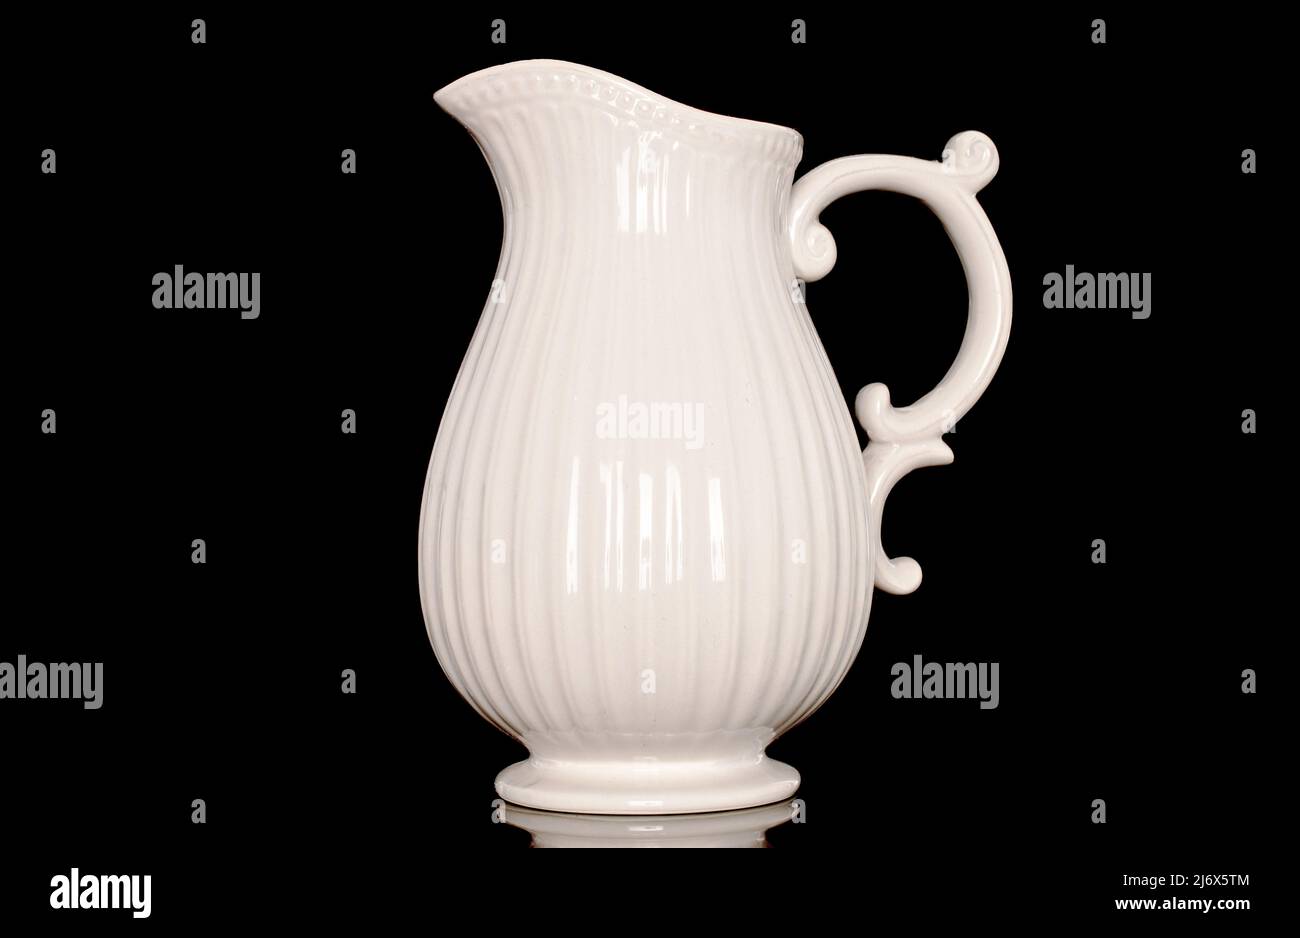 https://c8.alamy.com/comp/2J6X5TM/one-ceramic-milk-jug-close-up-isolated-on-a-black-background-2J6X5TM.jpg